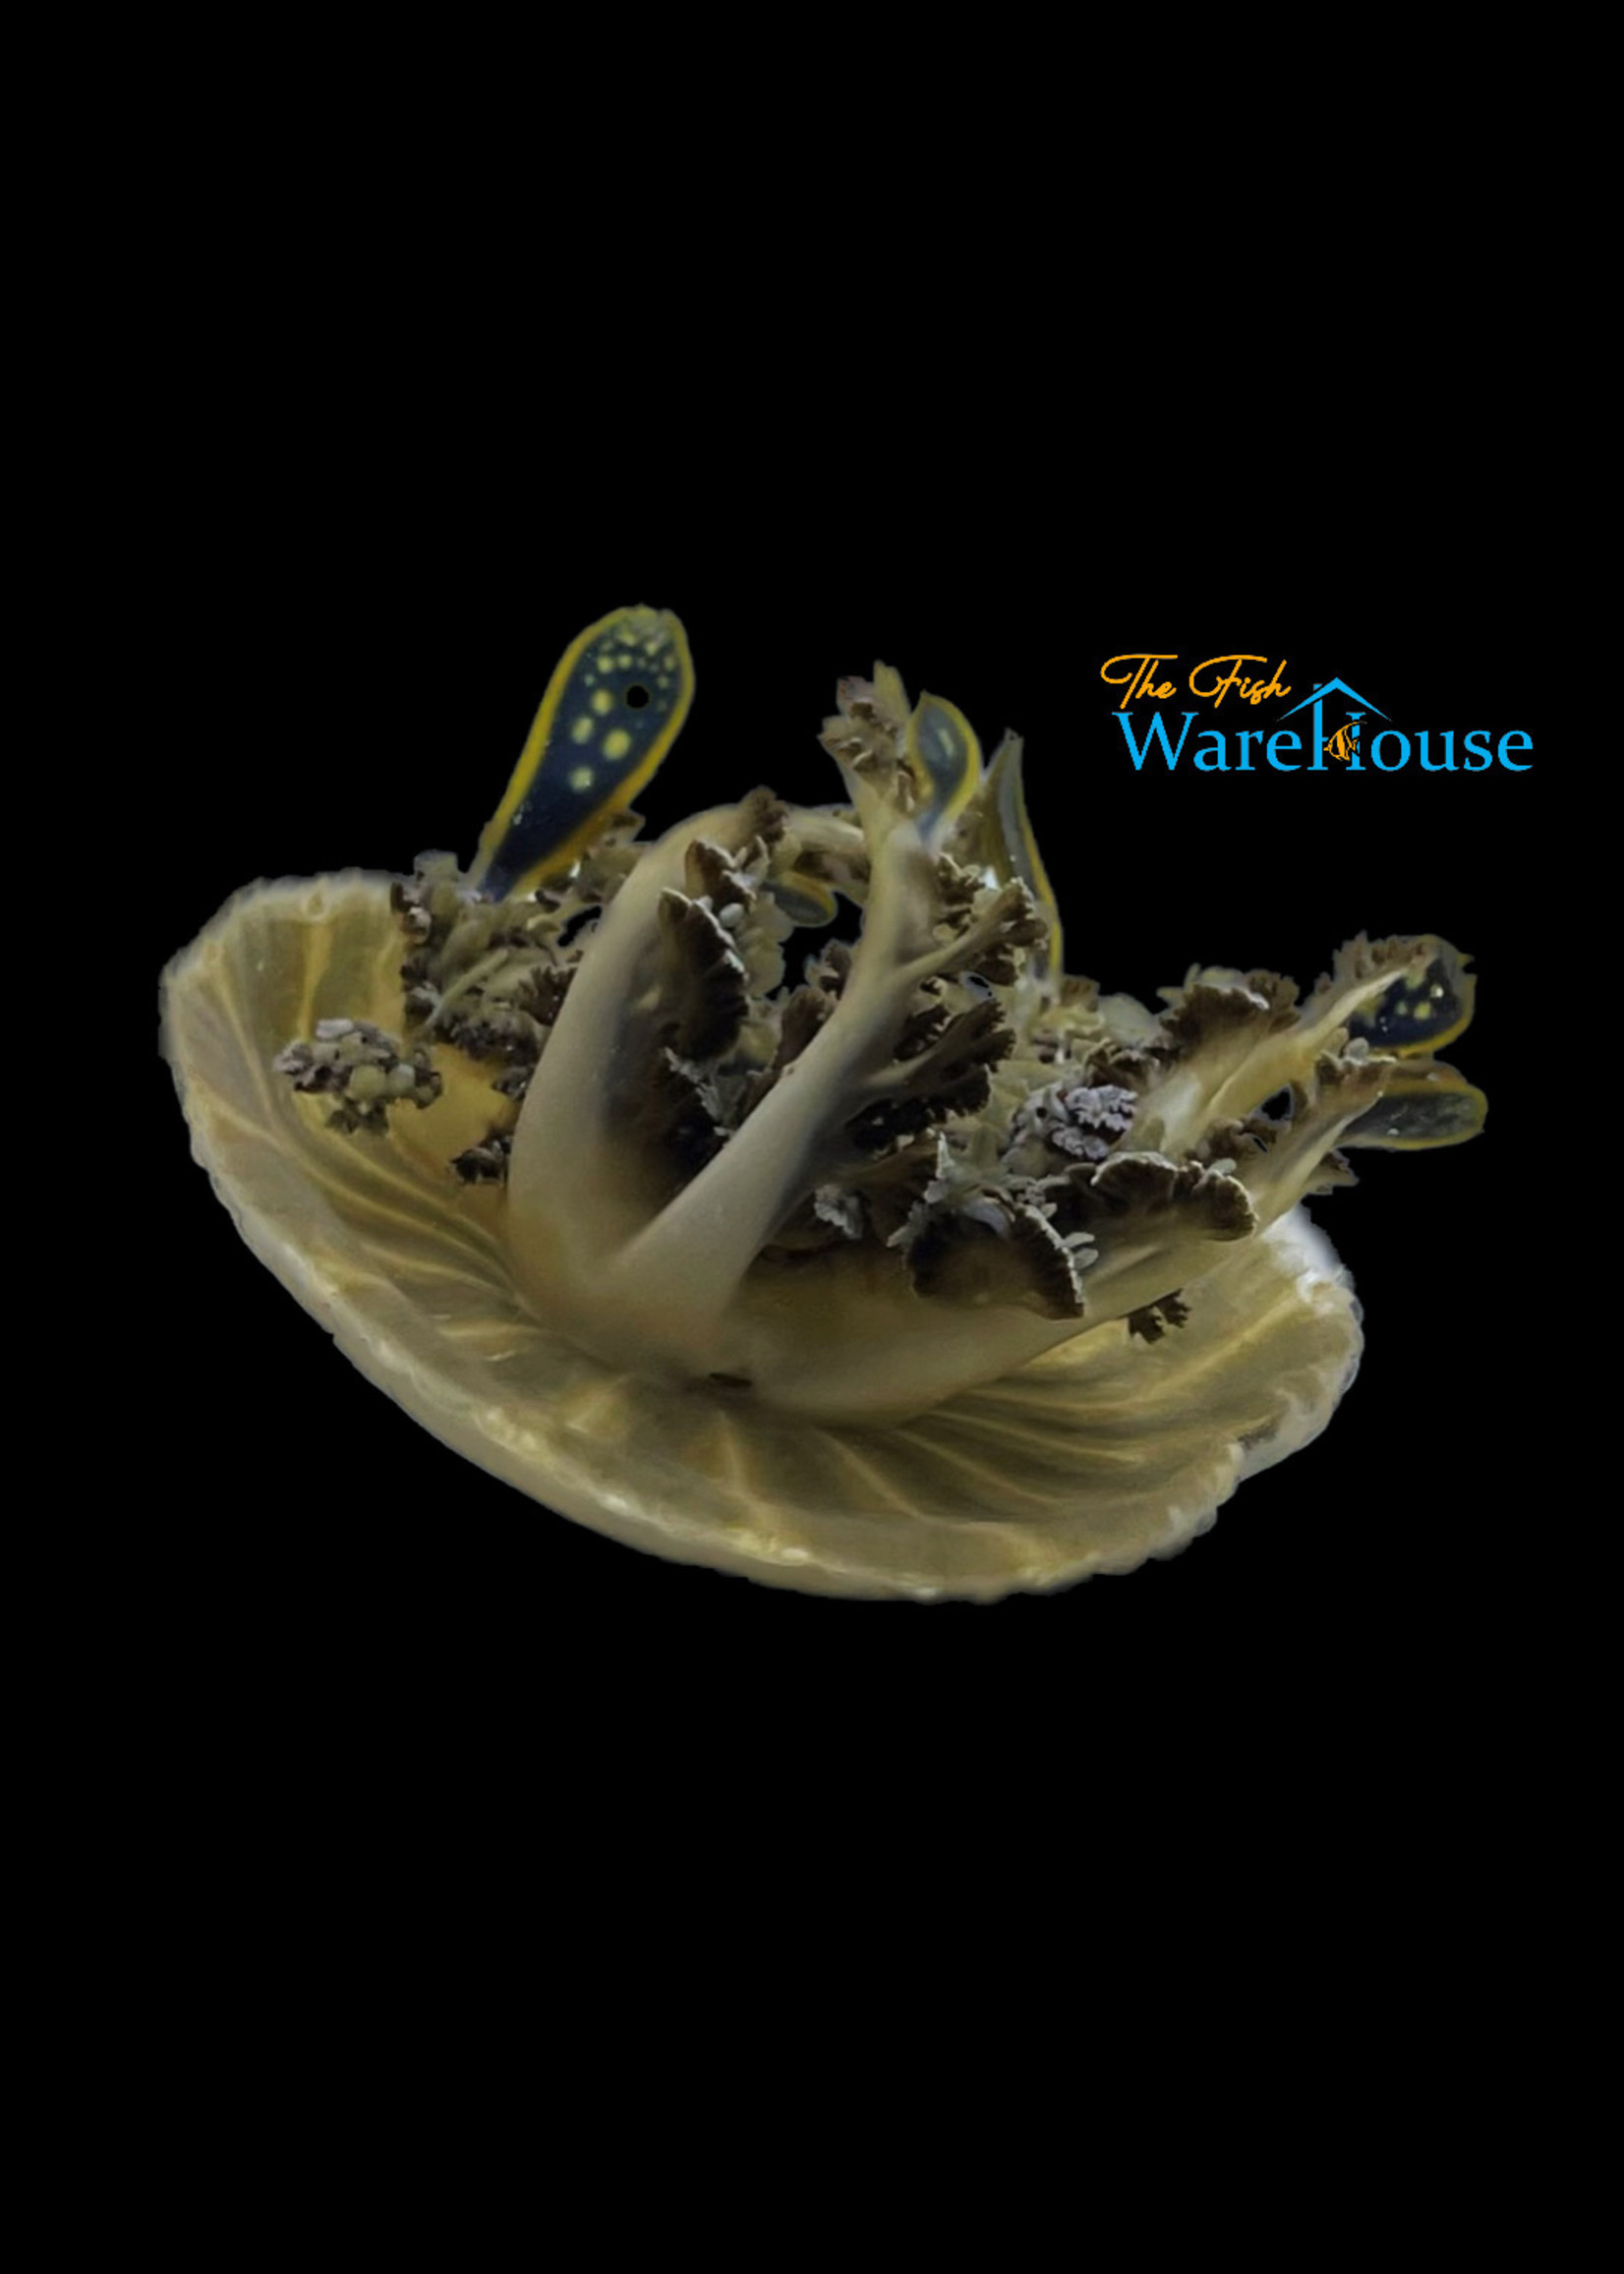 Upside Down Jellyfish (Cassiopea xamachana)